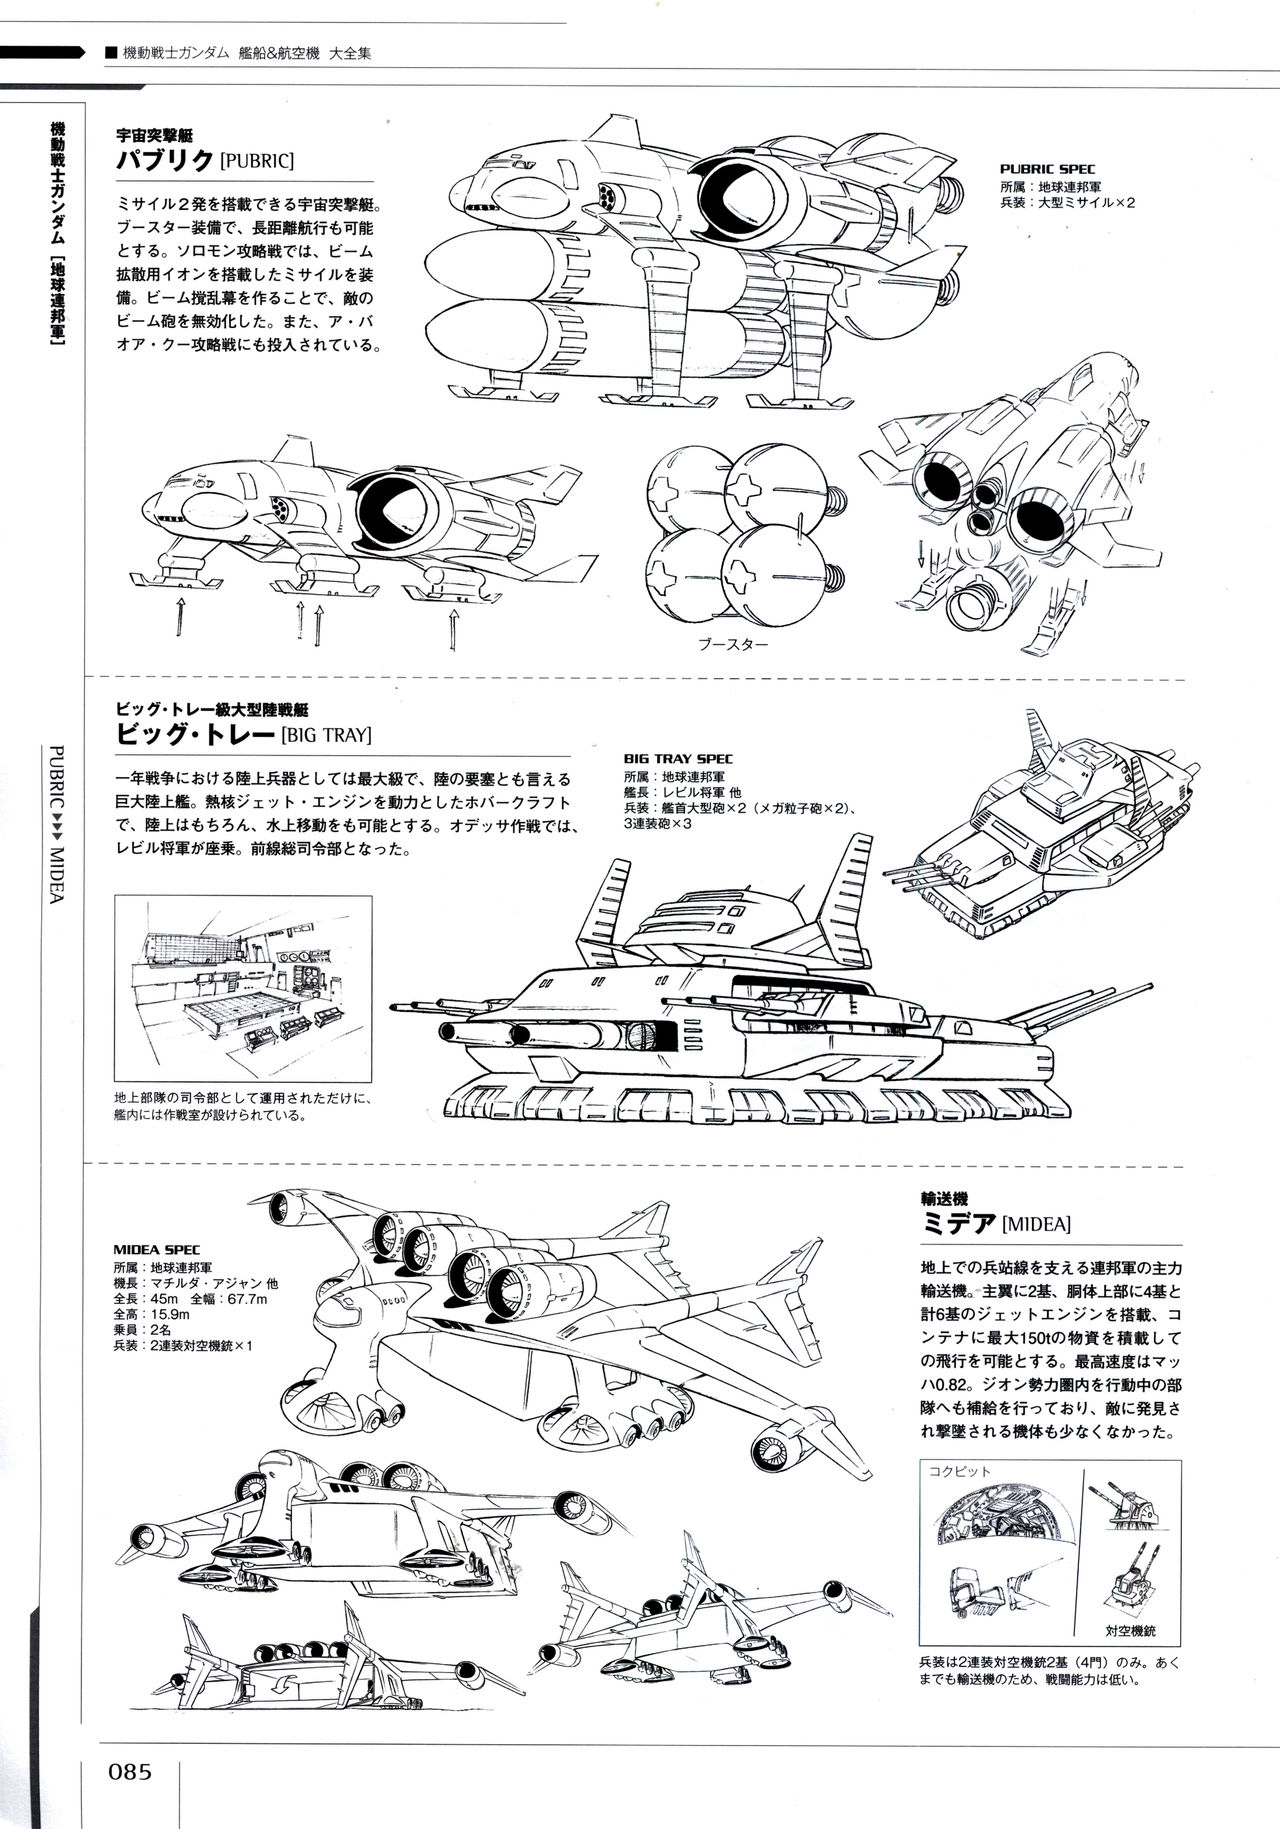 Mobile Suit Gundam - Ship & Aerospace Plane Encyclopedia - Revised Edition 90